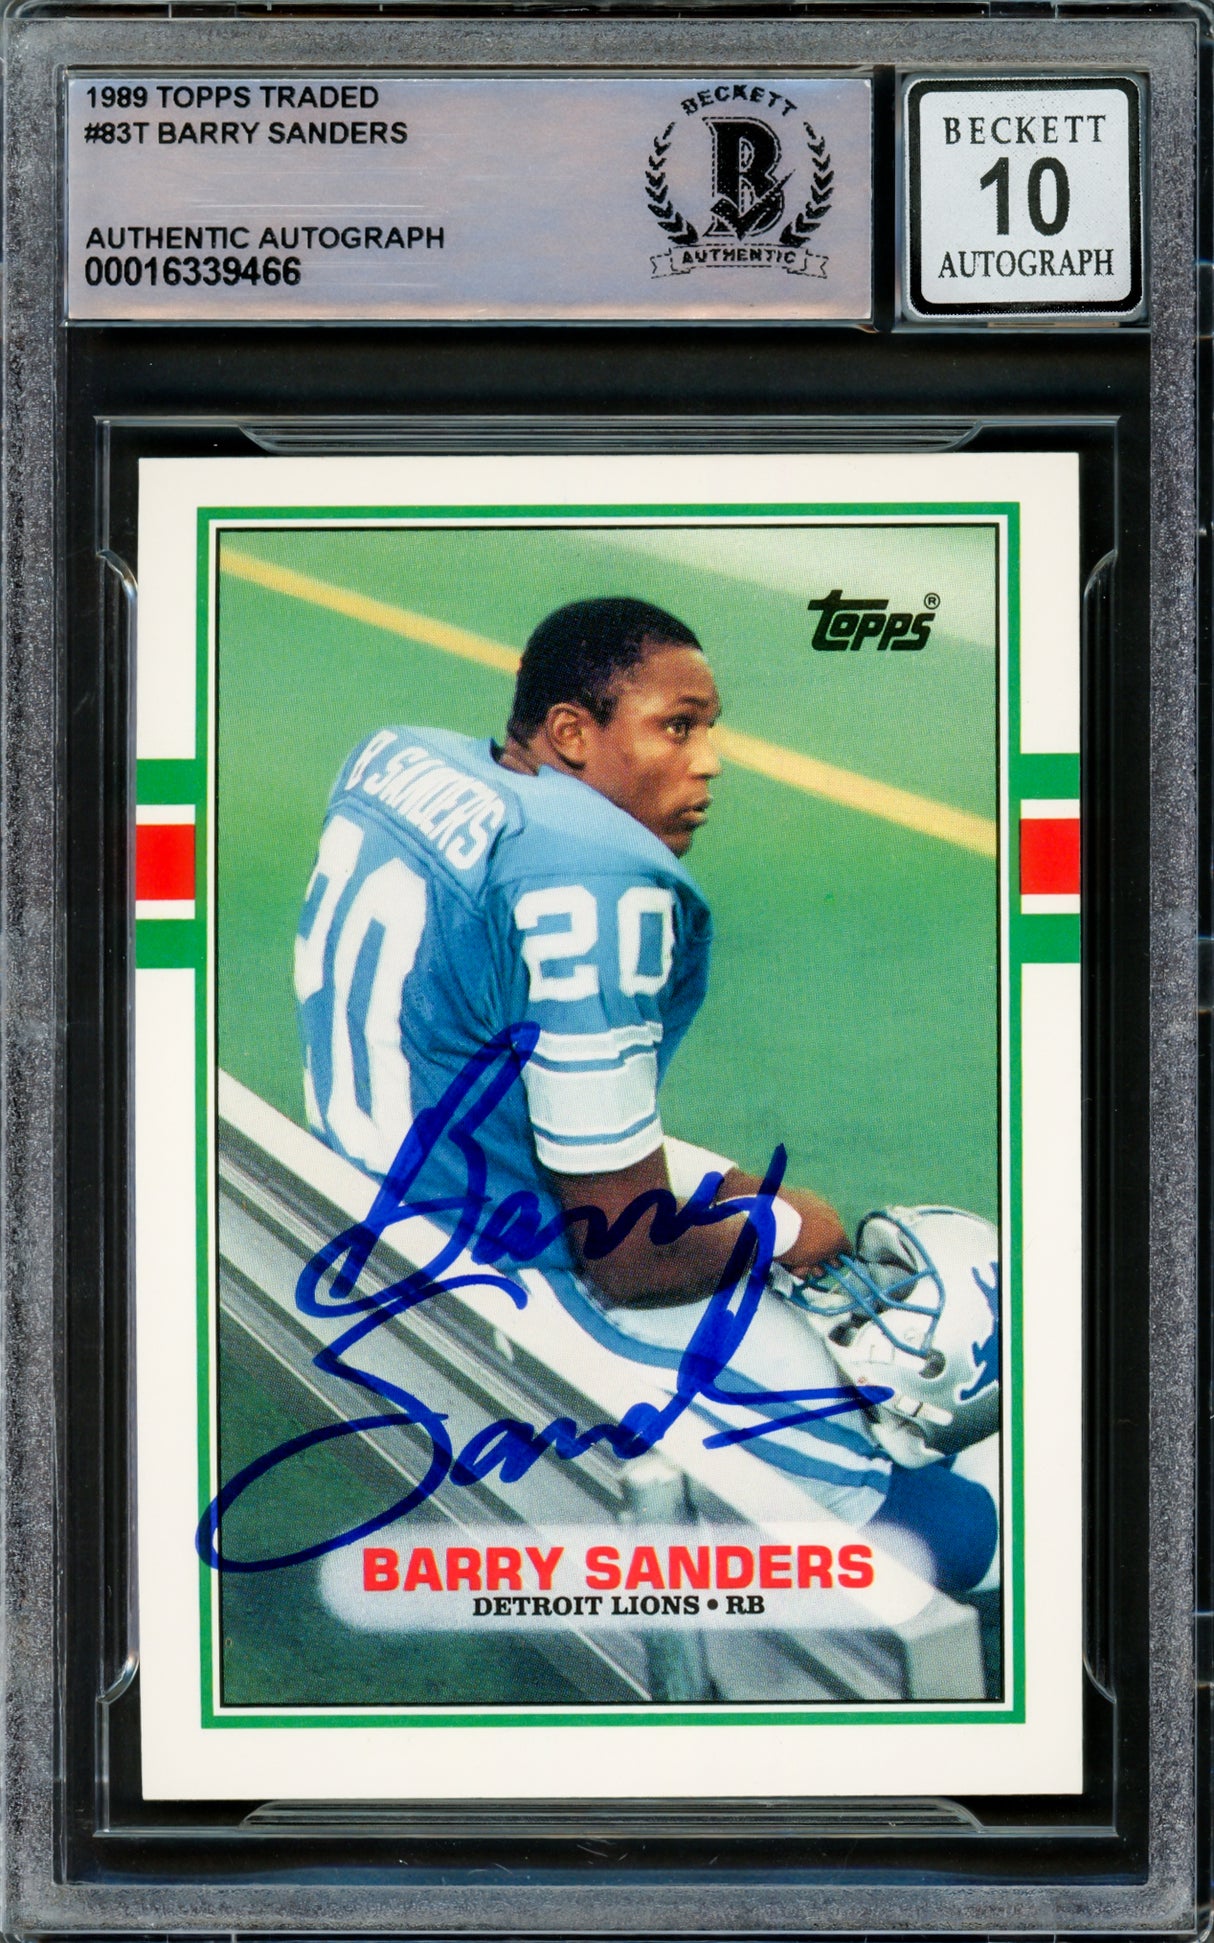 Barry Sanders Autographed 1989 Topps Traded Rookie Card #83T Detroit Lions Auto Grade Gem Mint 10 Vintage Rookie Signature Beckett BAS #16339466